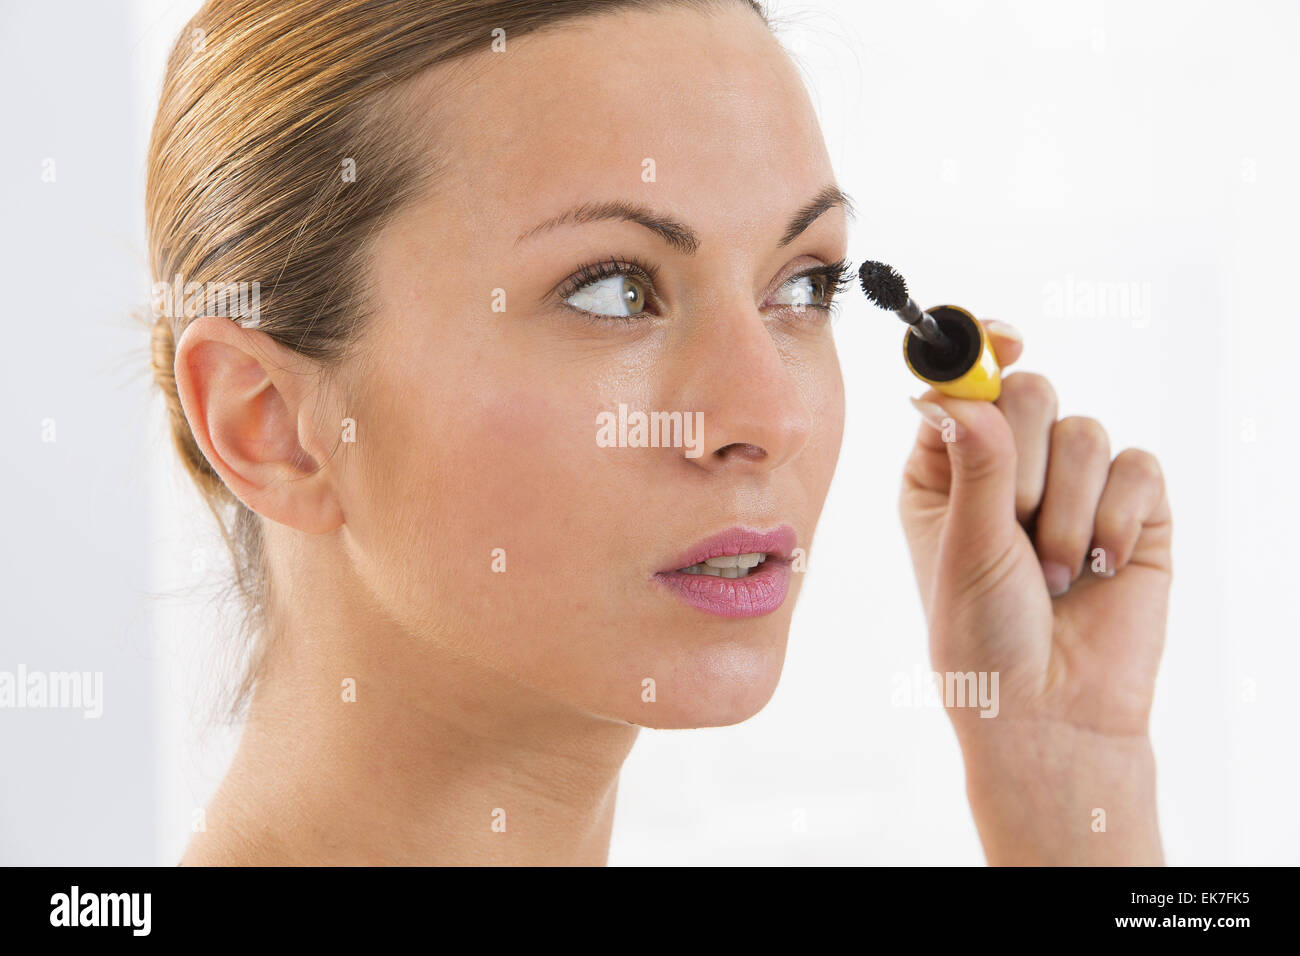 Mascara make up woman Stock Photo